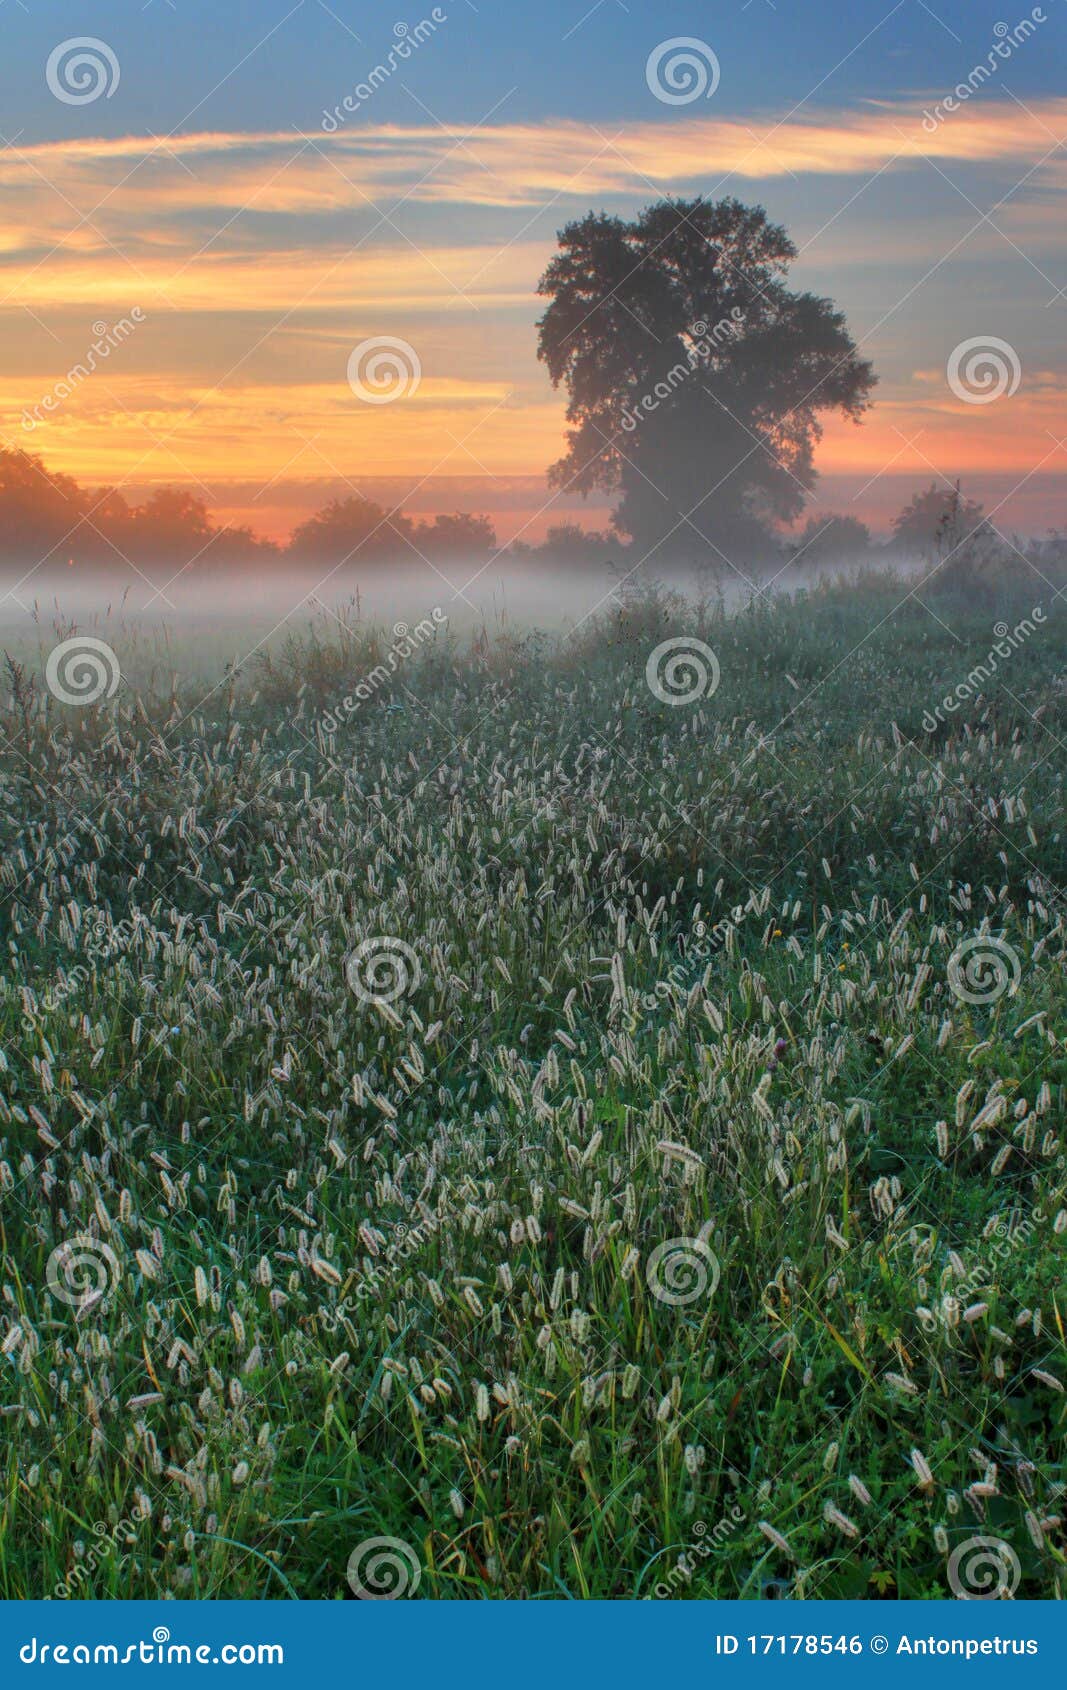  - misty-dawn-autumn-morning-17178546